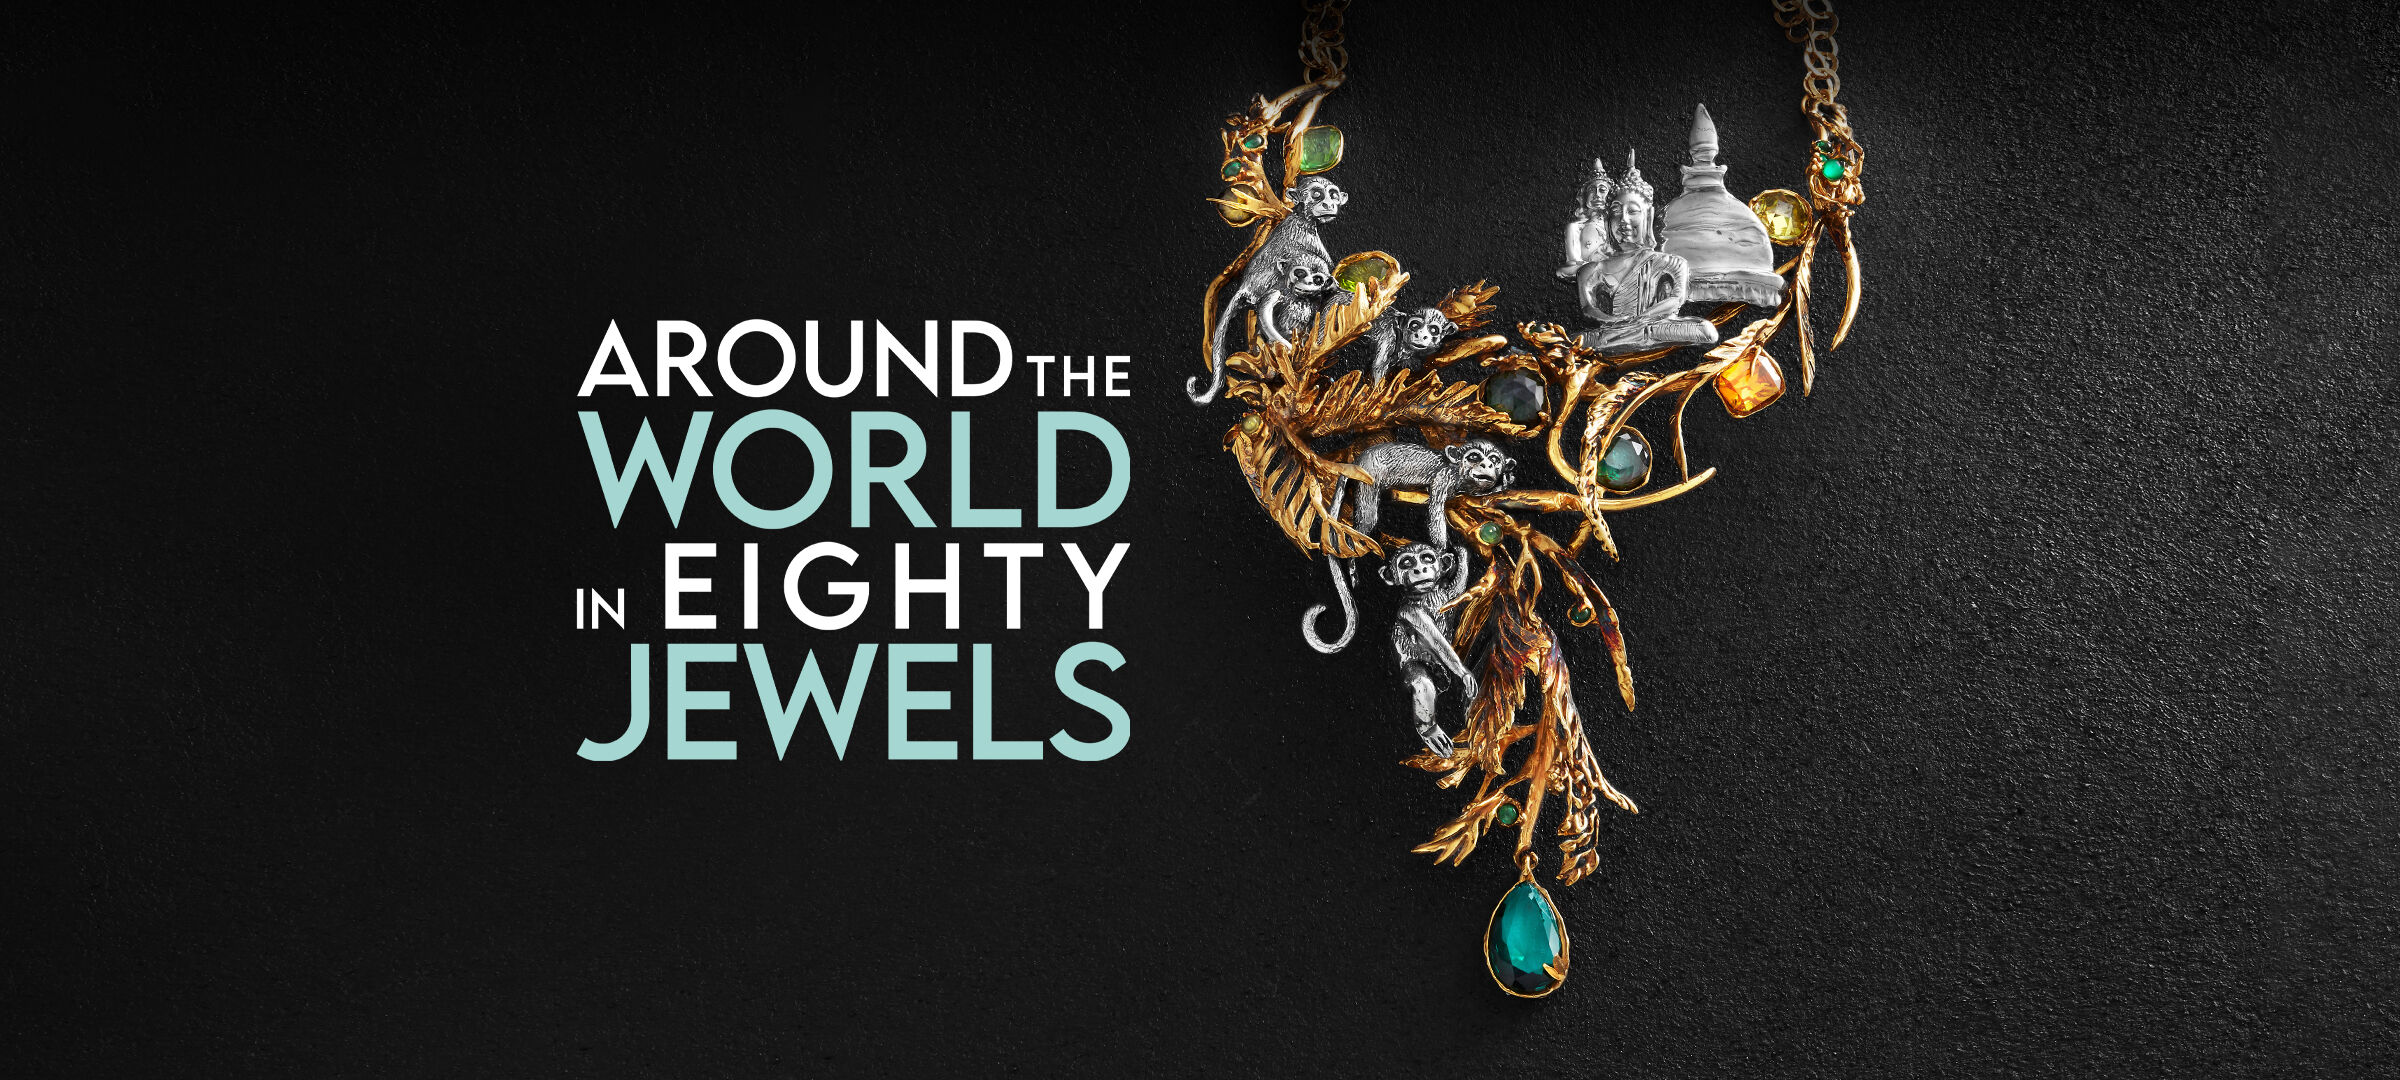 Around the World in Eighty Jewels